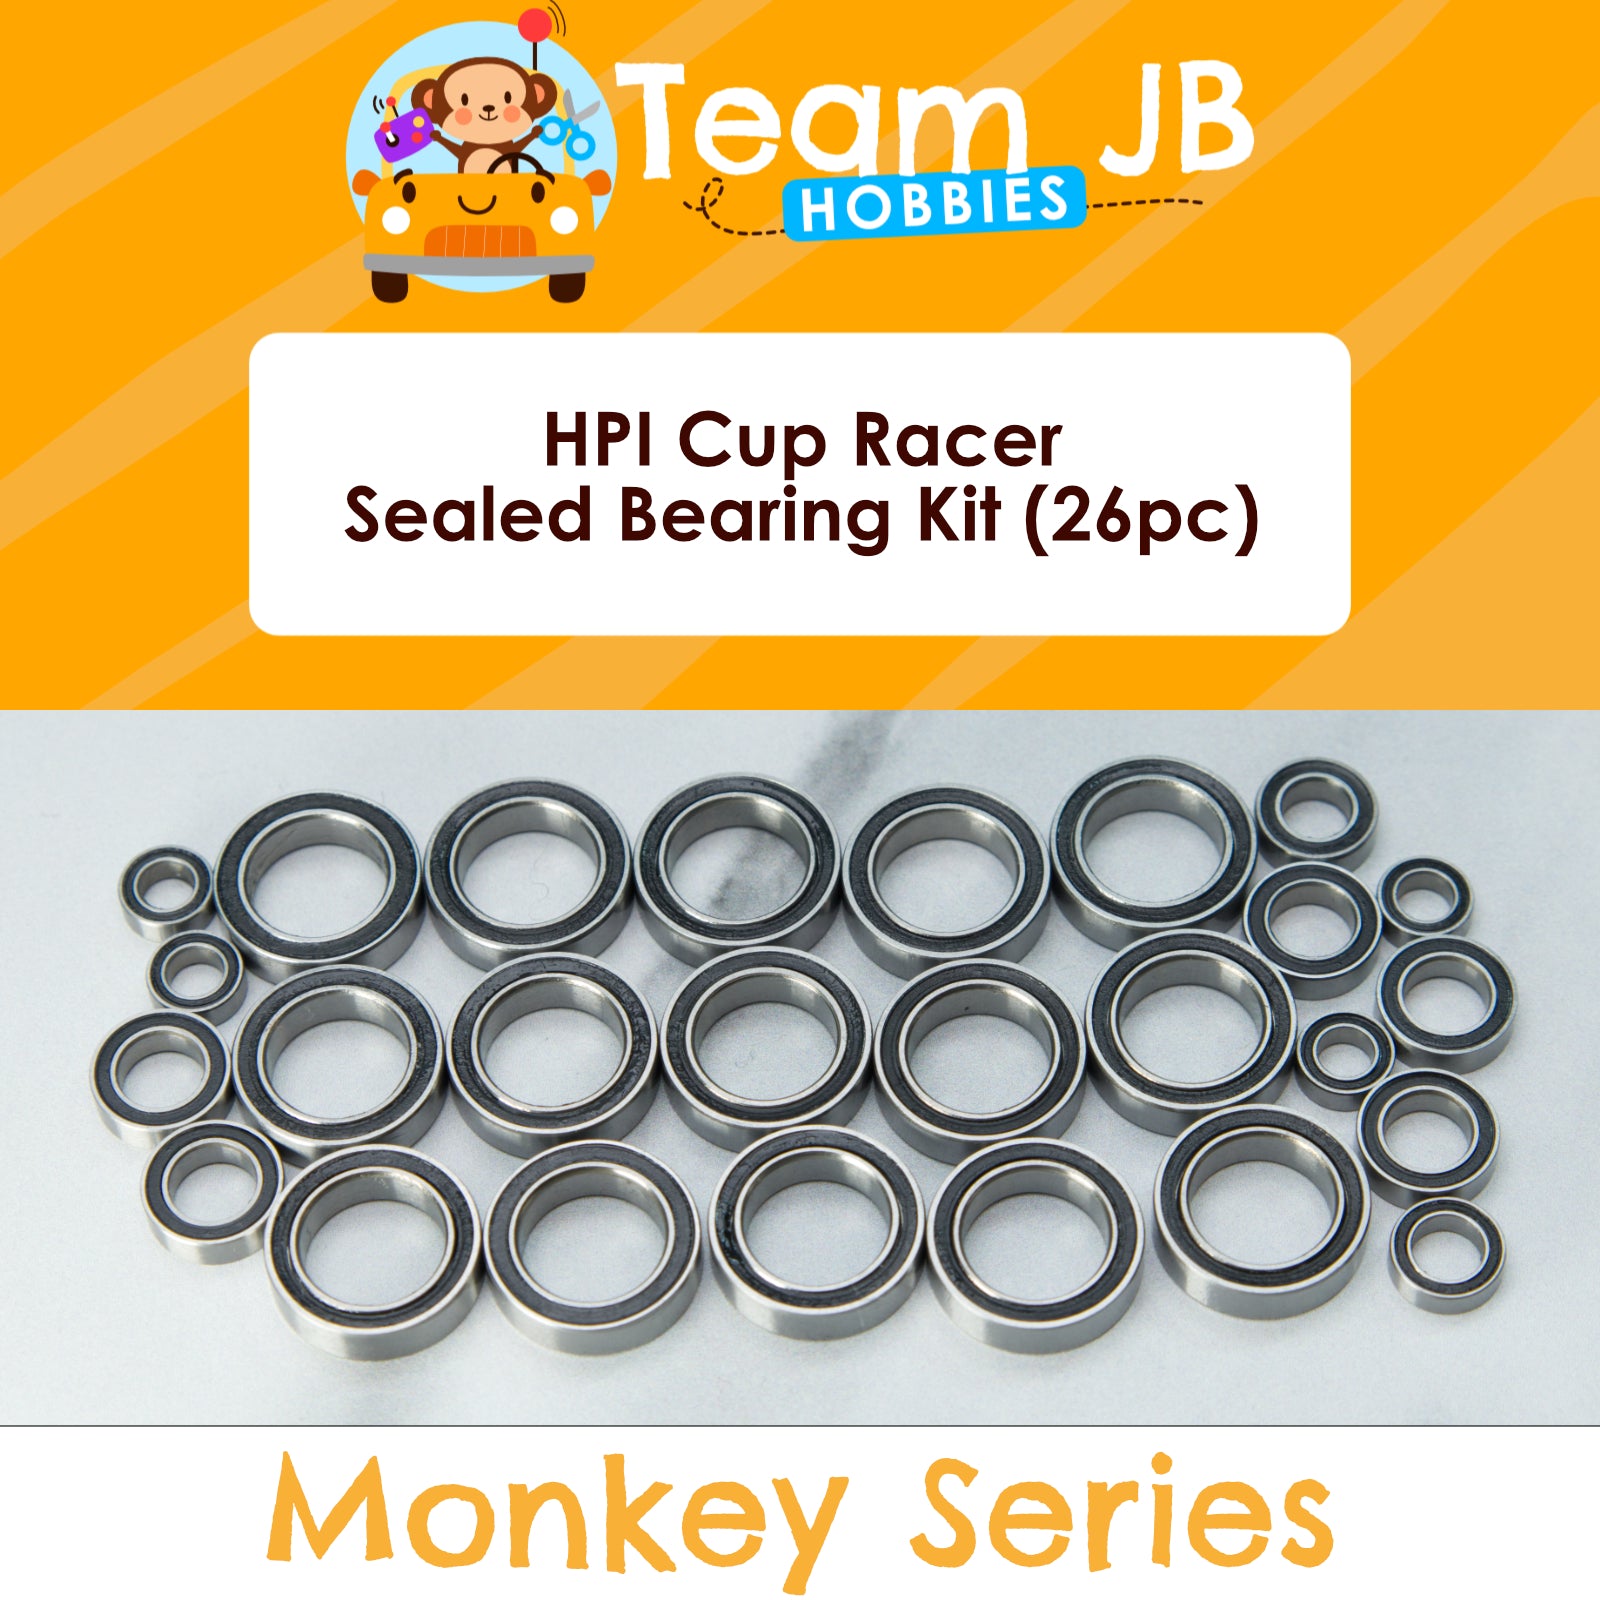 HPI Cup Racer - Sealed Bearing Kit